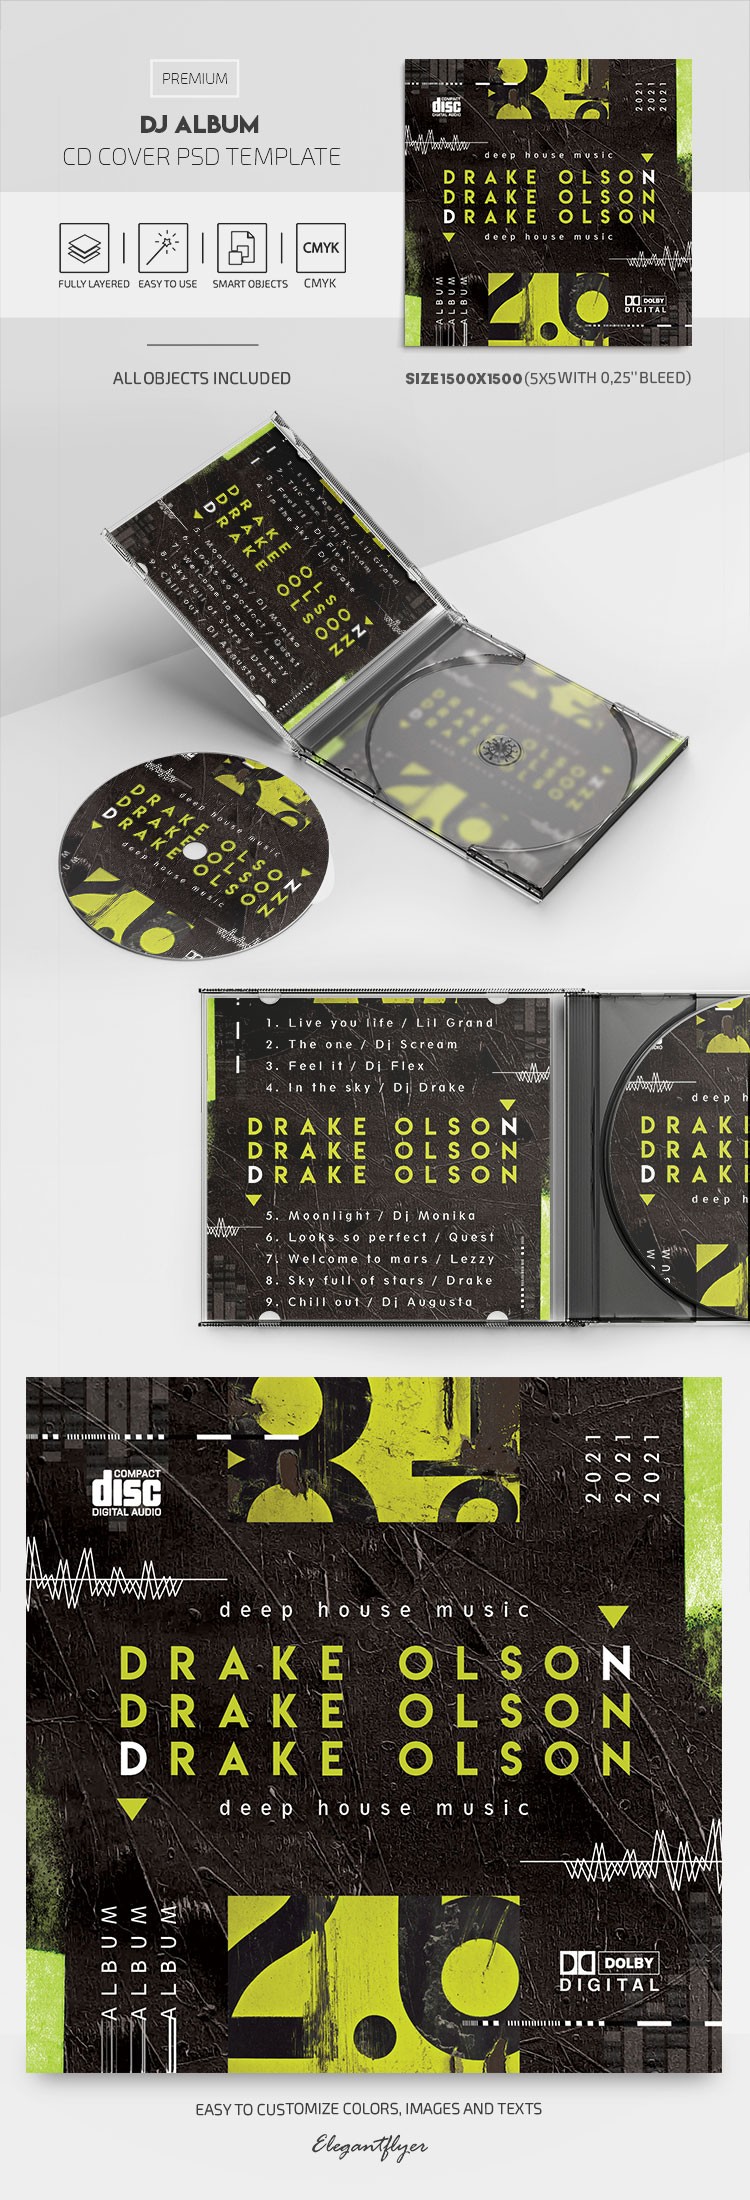 DJ Album CD Cover by ElegantFlyer